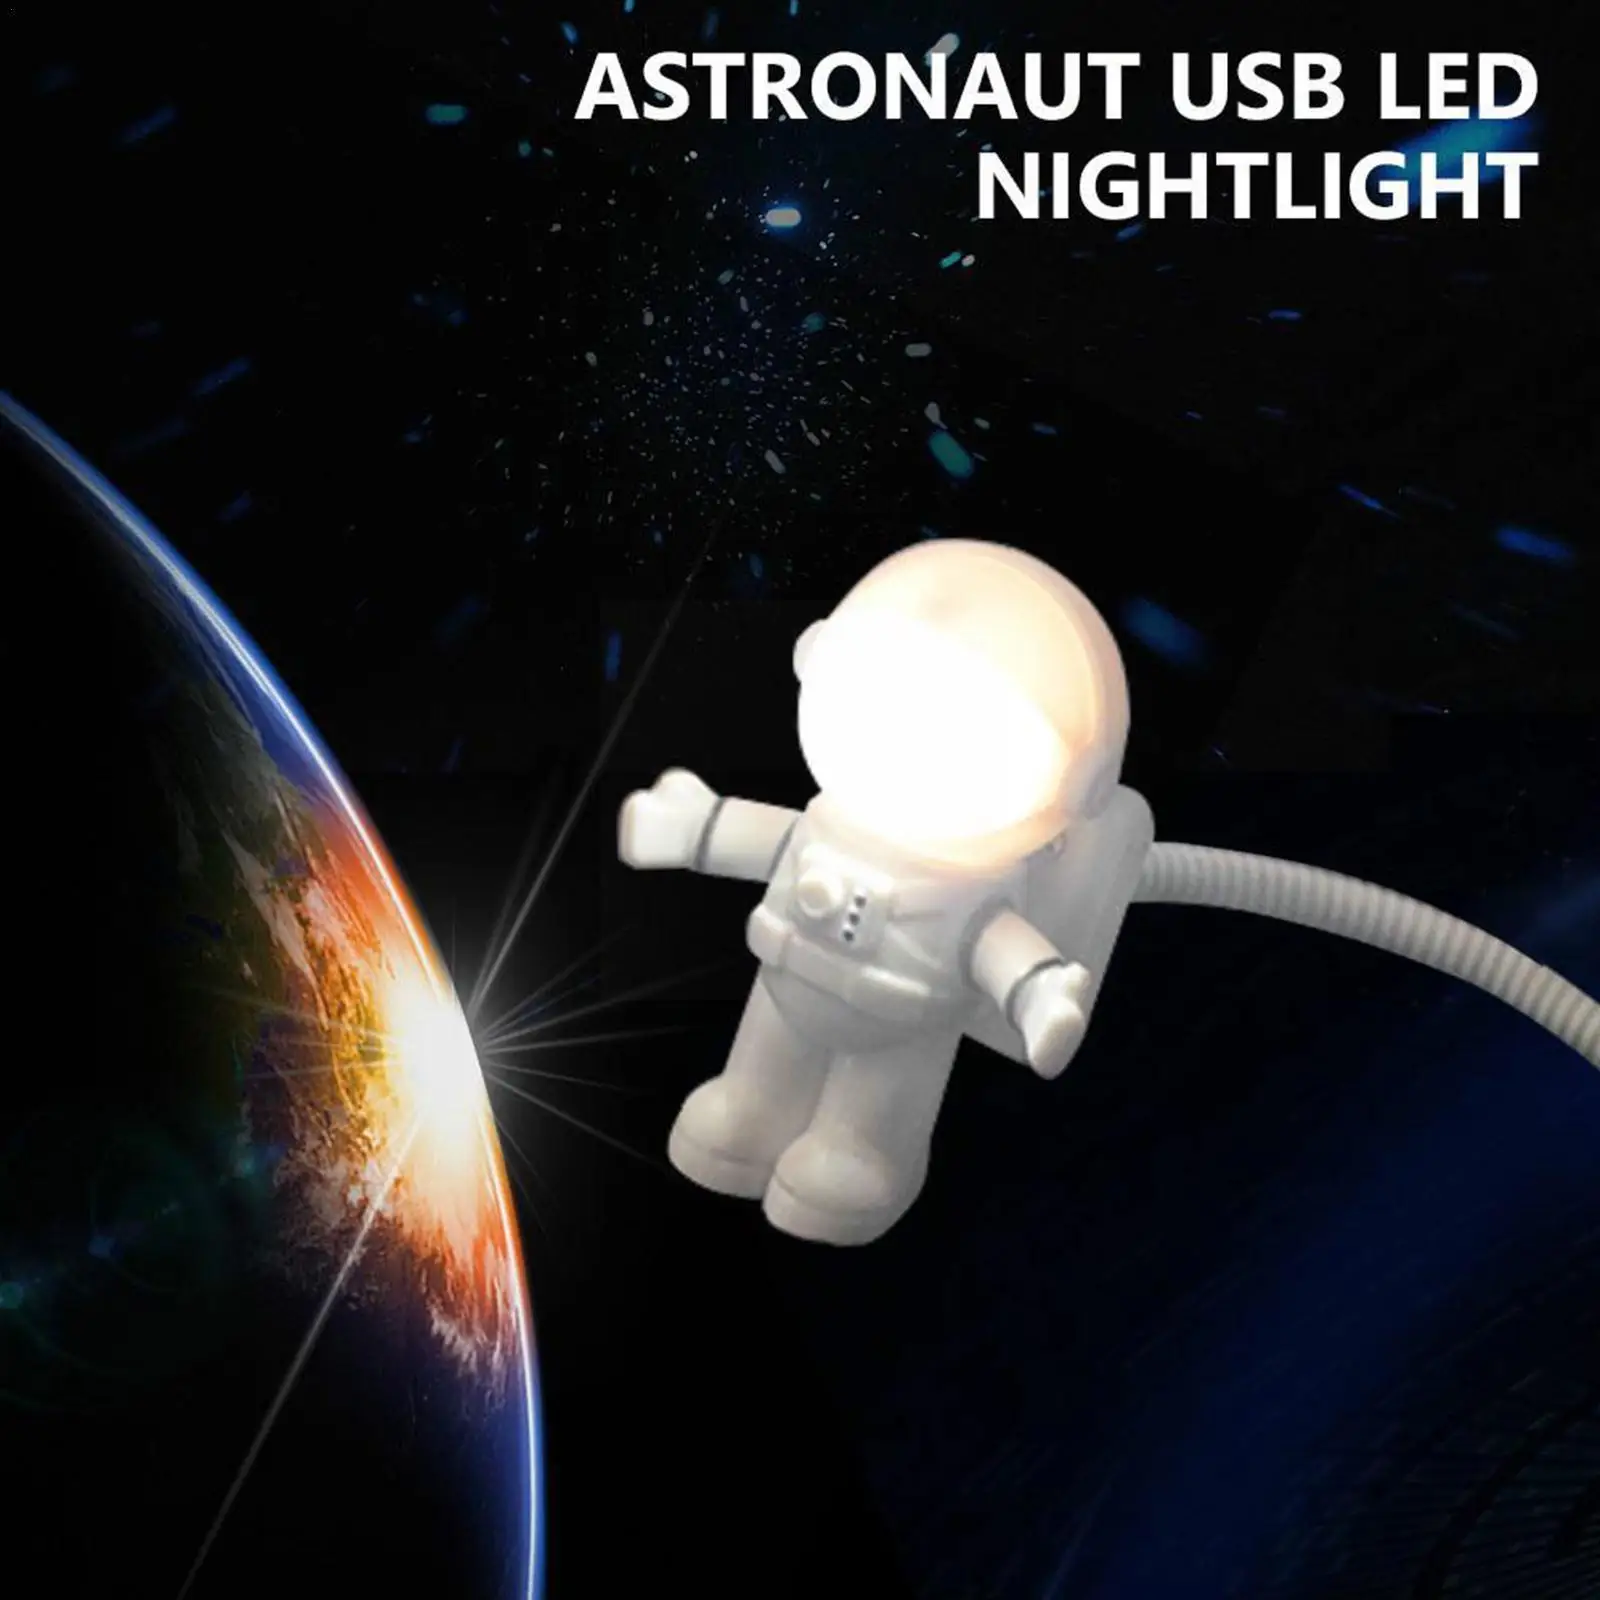 

Usb Astronaut Led Light Night Light Desk Lamp Flexible Adjustable Night Lamp For Computer Pc Lamp Room Decoration Nightligh J7x7